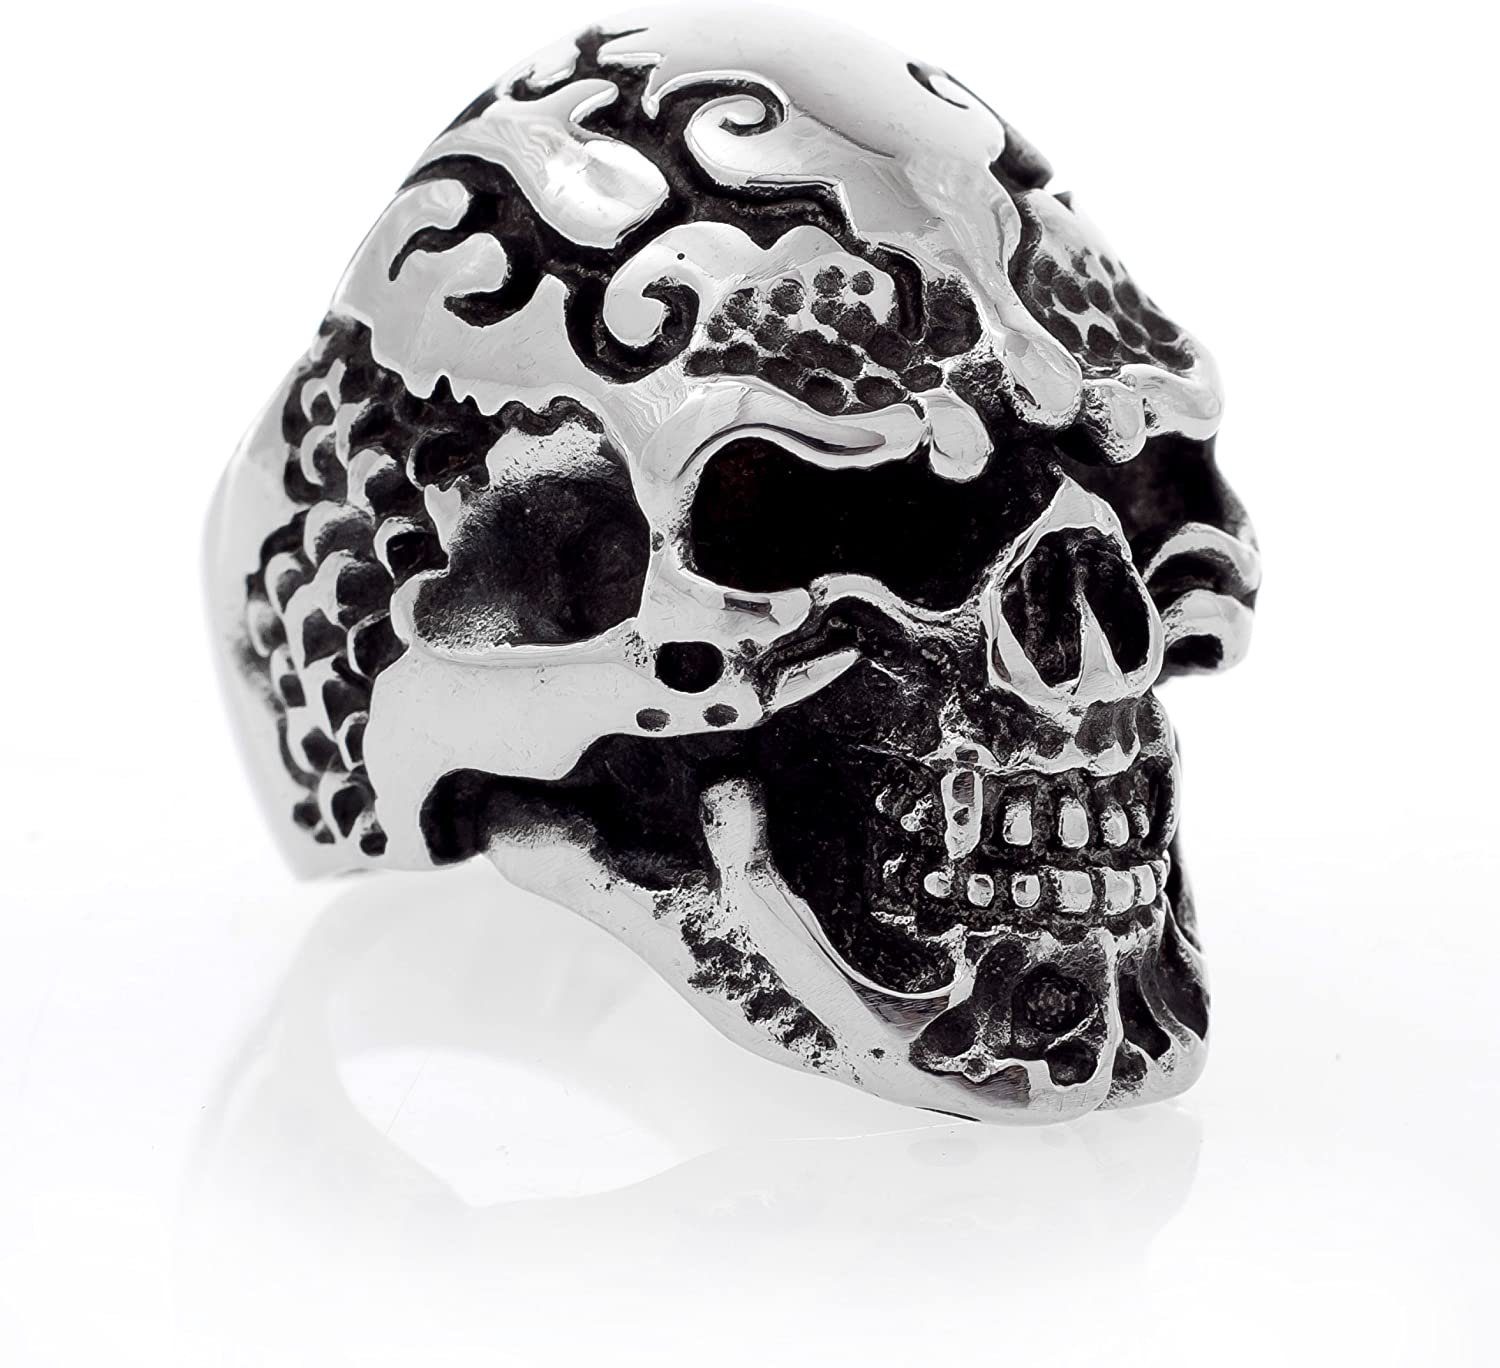 Edelstahl Karisma 316L - Karisma -Totenkopf Gothic - Bulk skull Fingerring Poliert Hoch 70 Ring SRSK005 (22.3) -